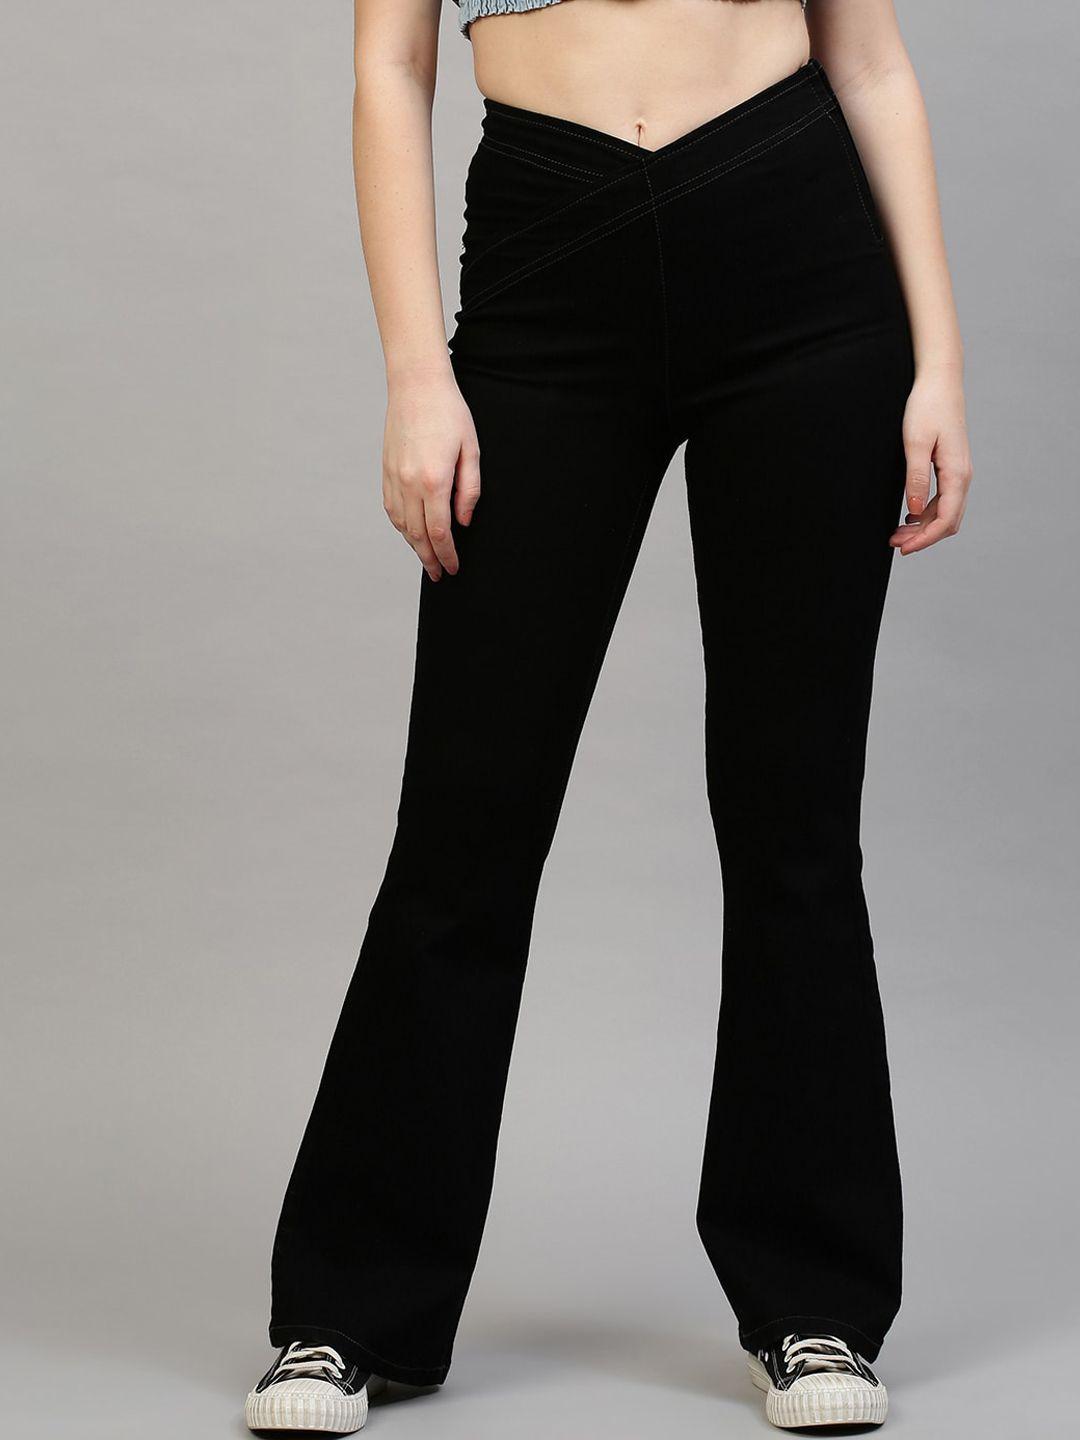 tarama-women-black-flared-high-rise-stretchable-jeans